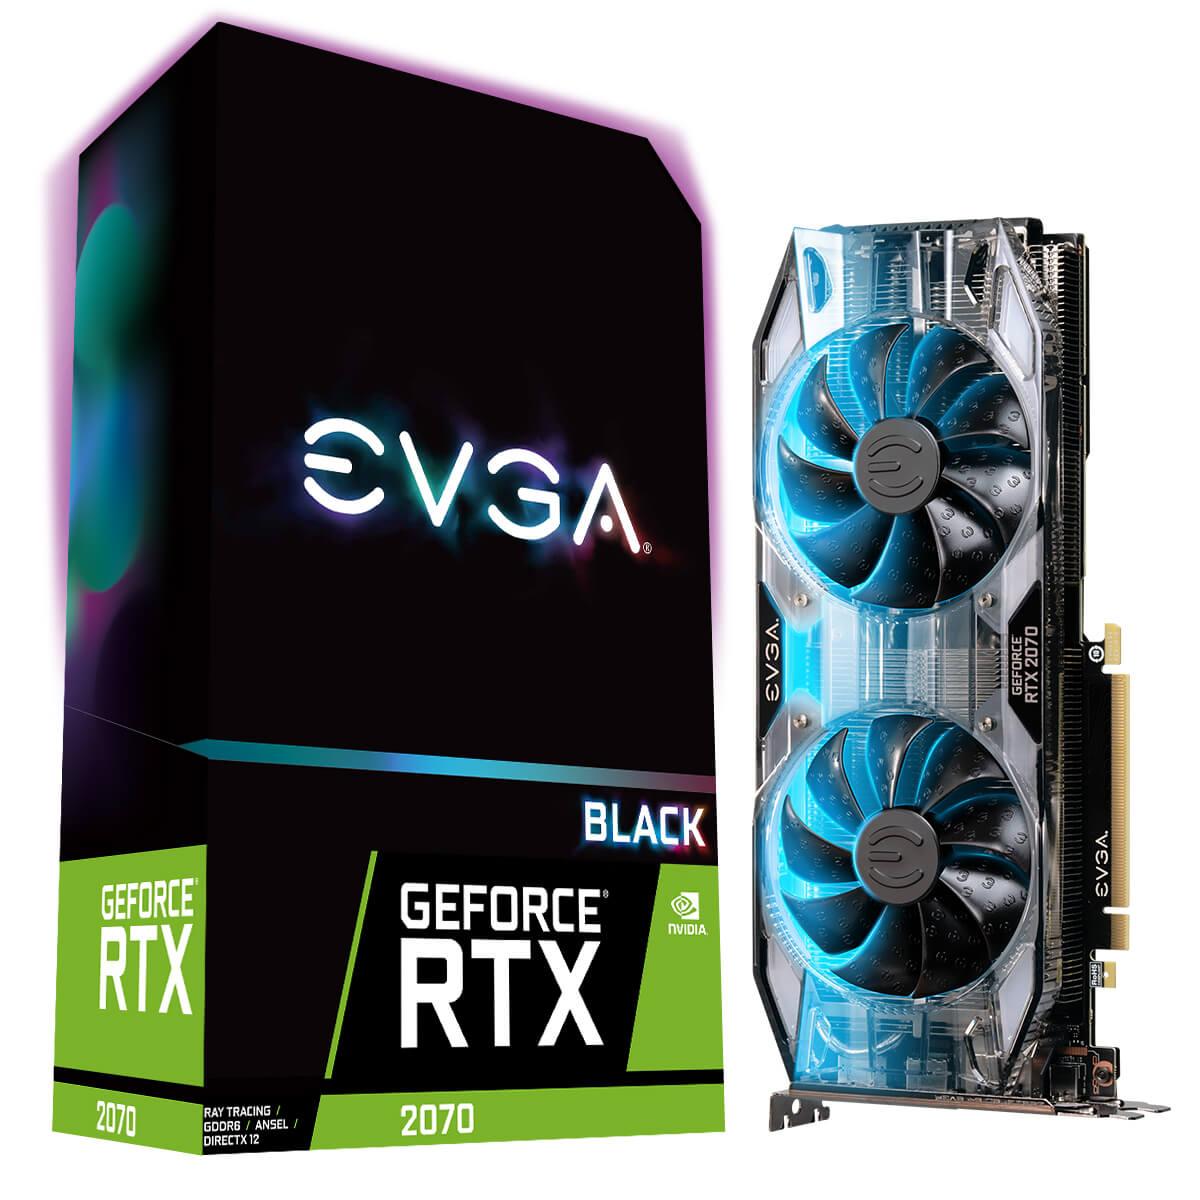 EVGA GeForce RTX 2070 8 GB XC BLACK